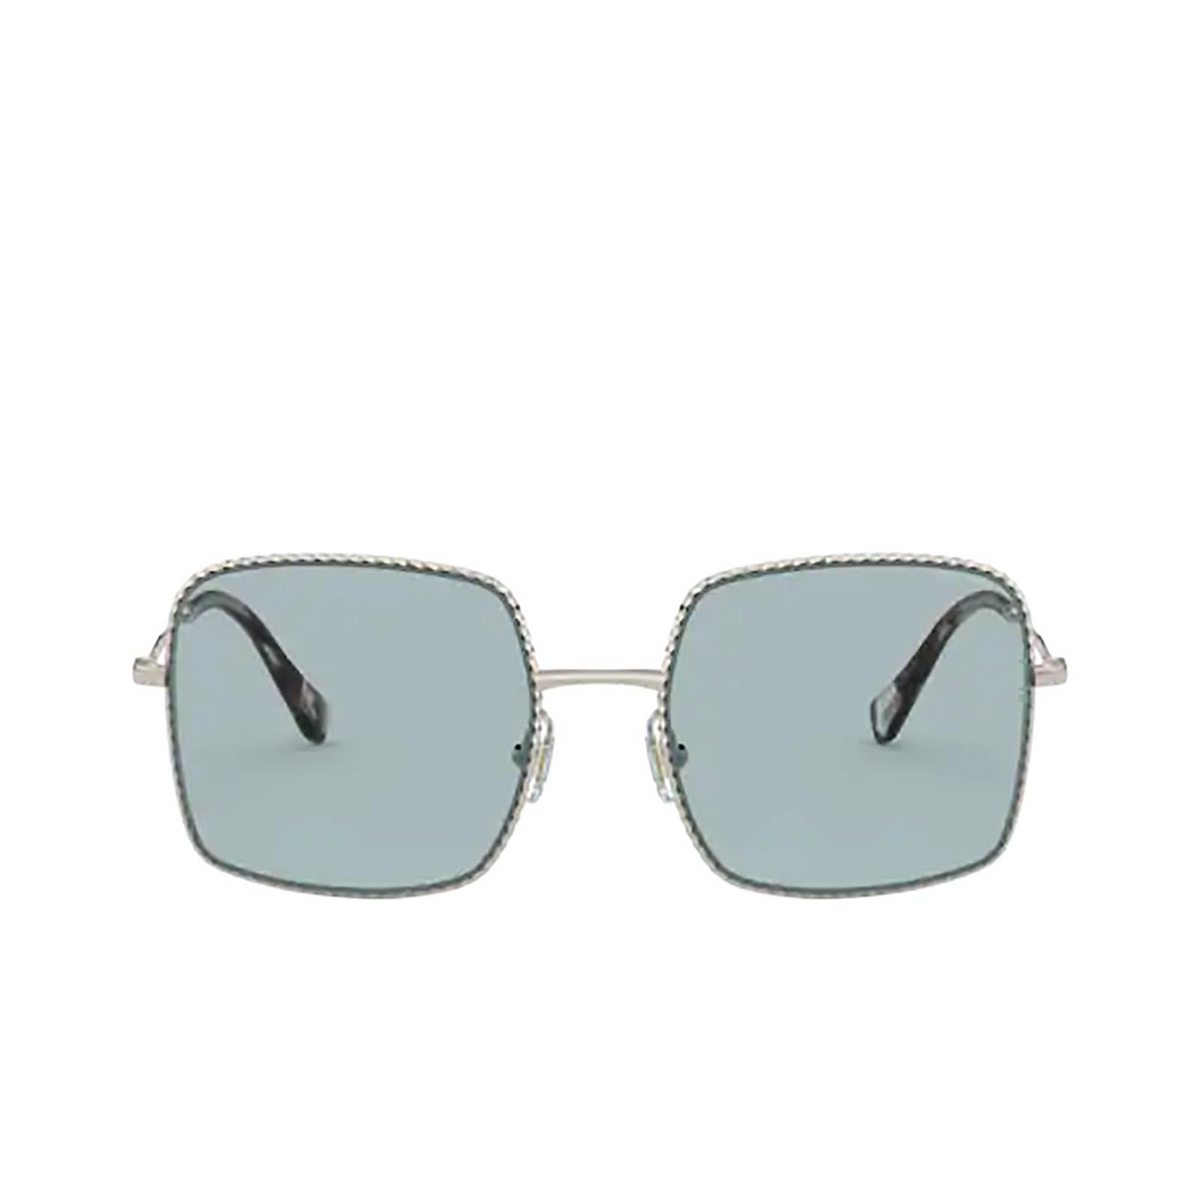 Miu Miu® Square Sunglasses: MU 61VS color Pale Gold ZVN02F - front view.